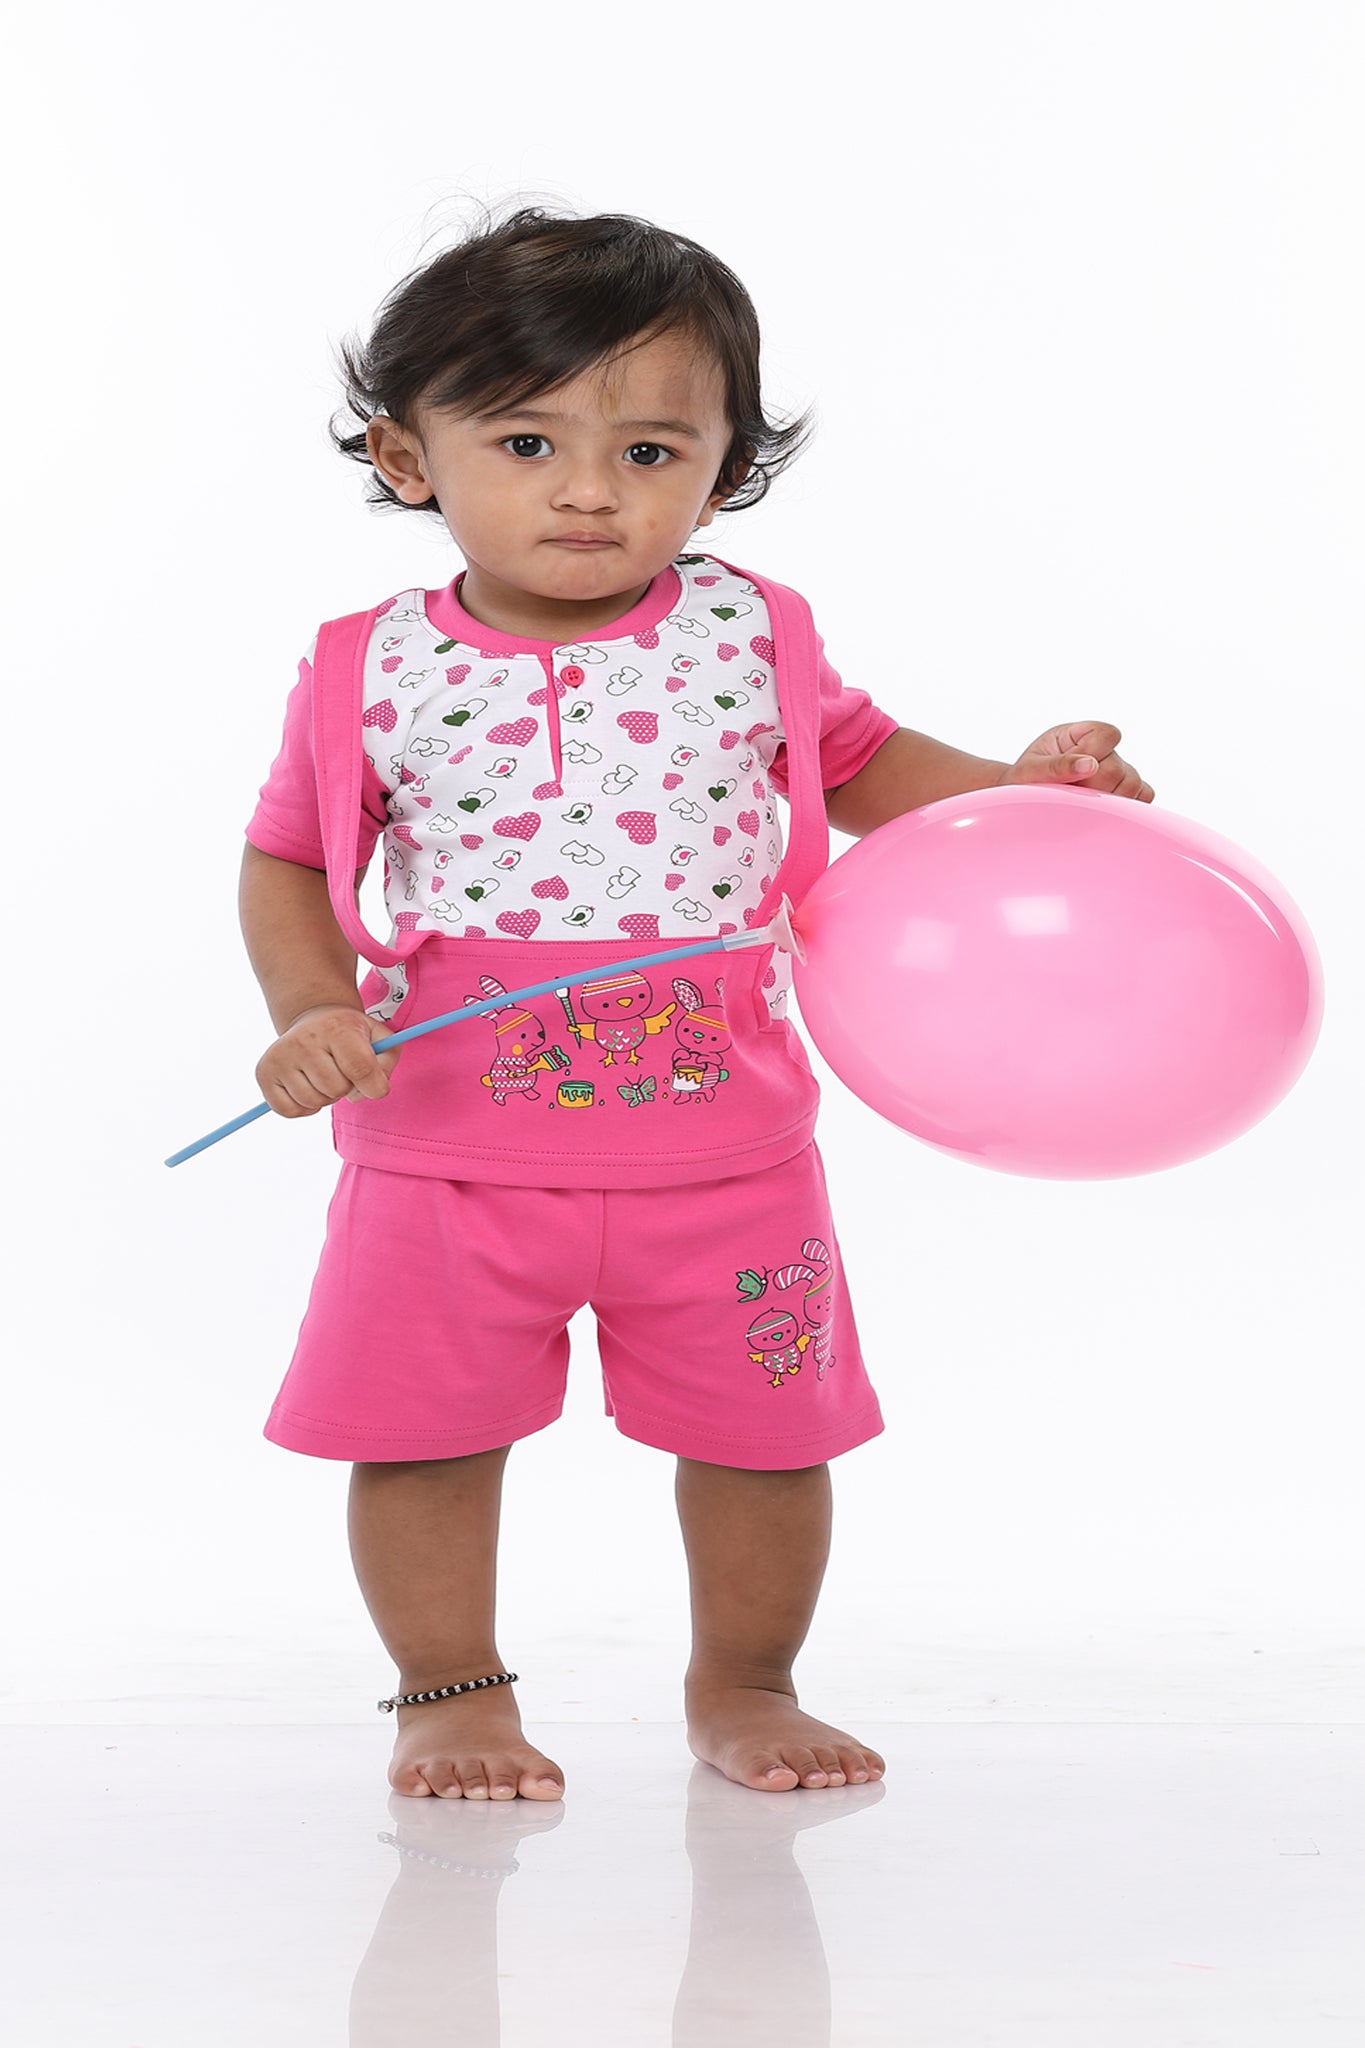 Selvas Infants Unisex Half Sleeve Top With Shorts 8025